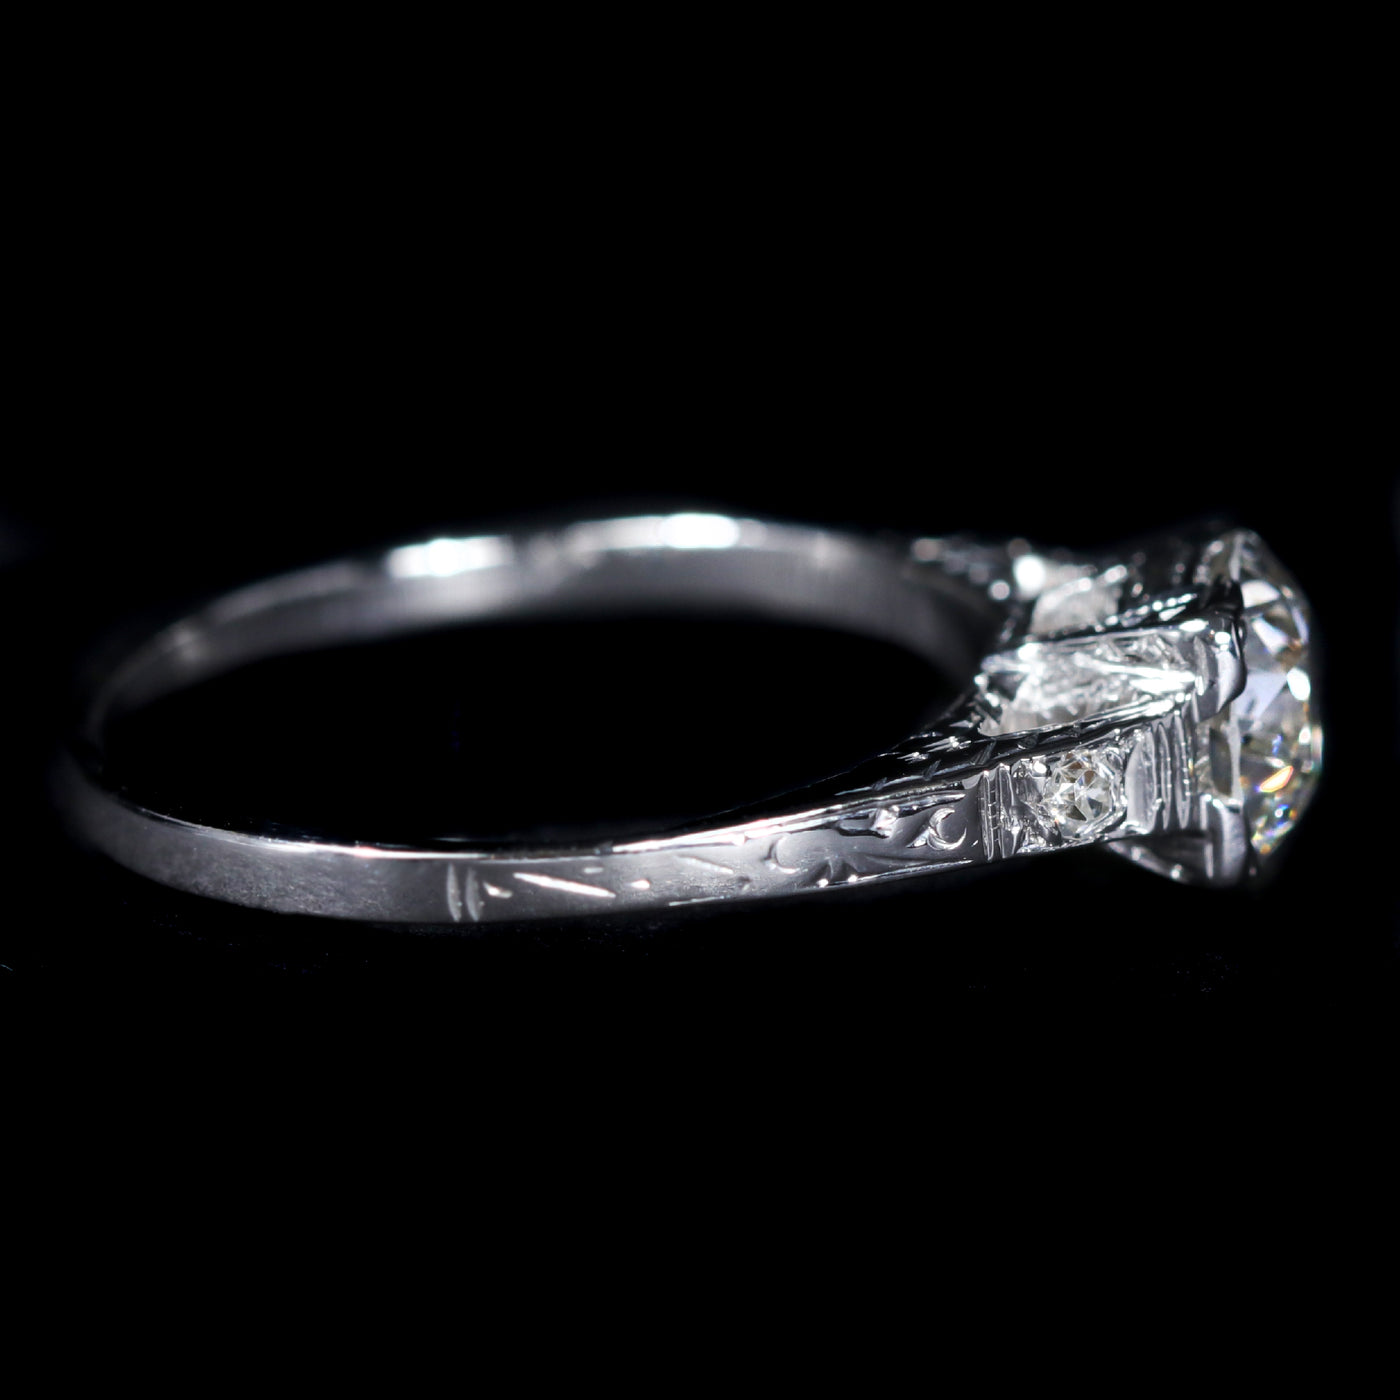 Art Deco 0.91 Carat Old European Cut Diamond Engagement Ring